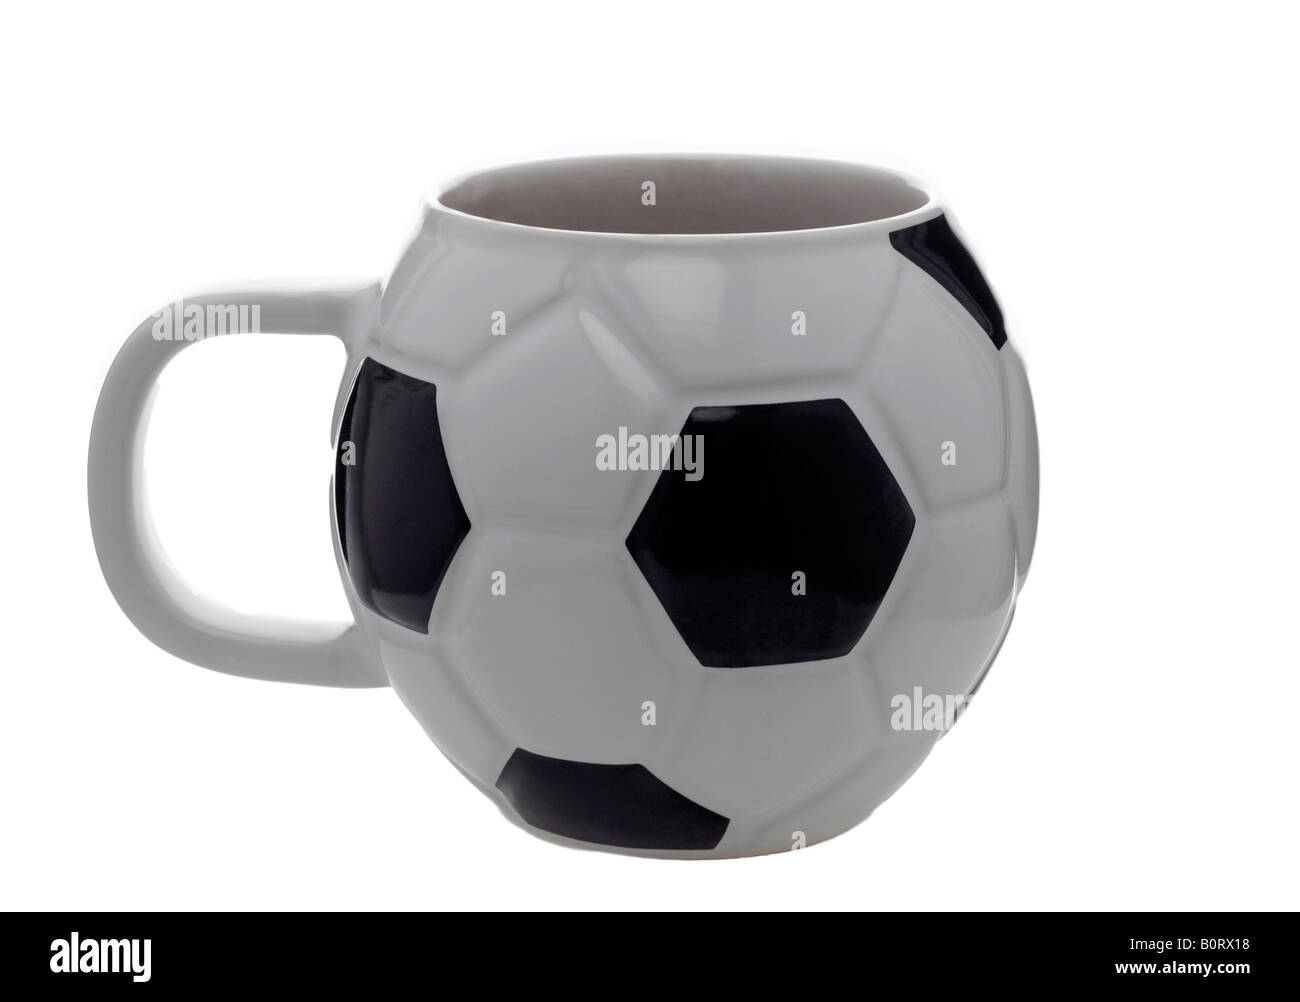 Football shaped mug hi-res stock photography and images - Alamy